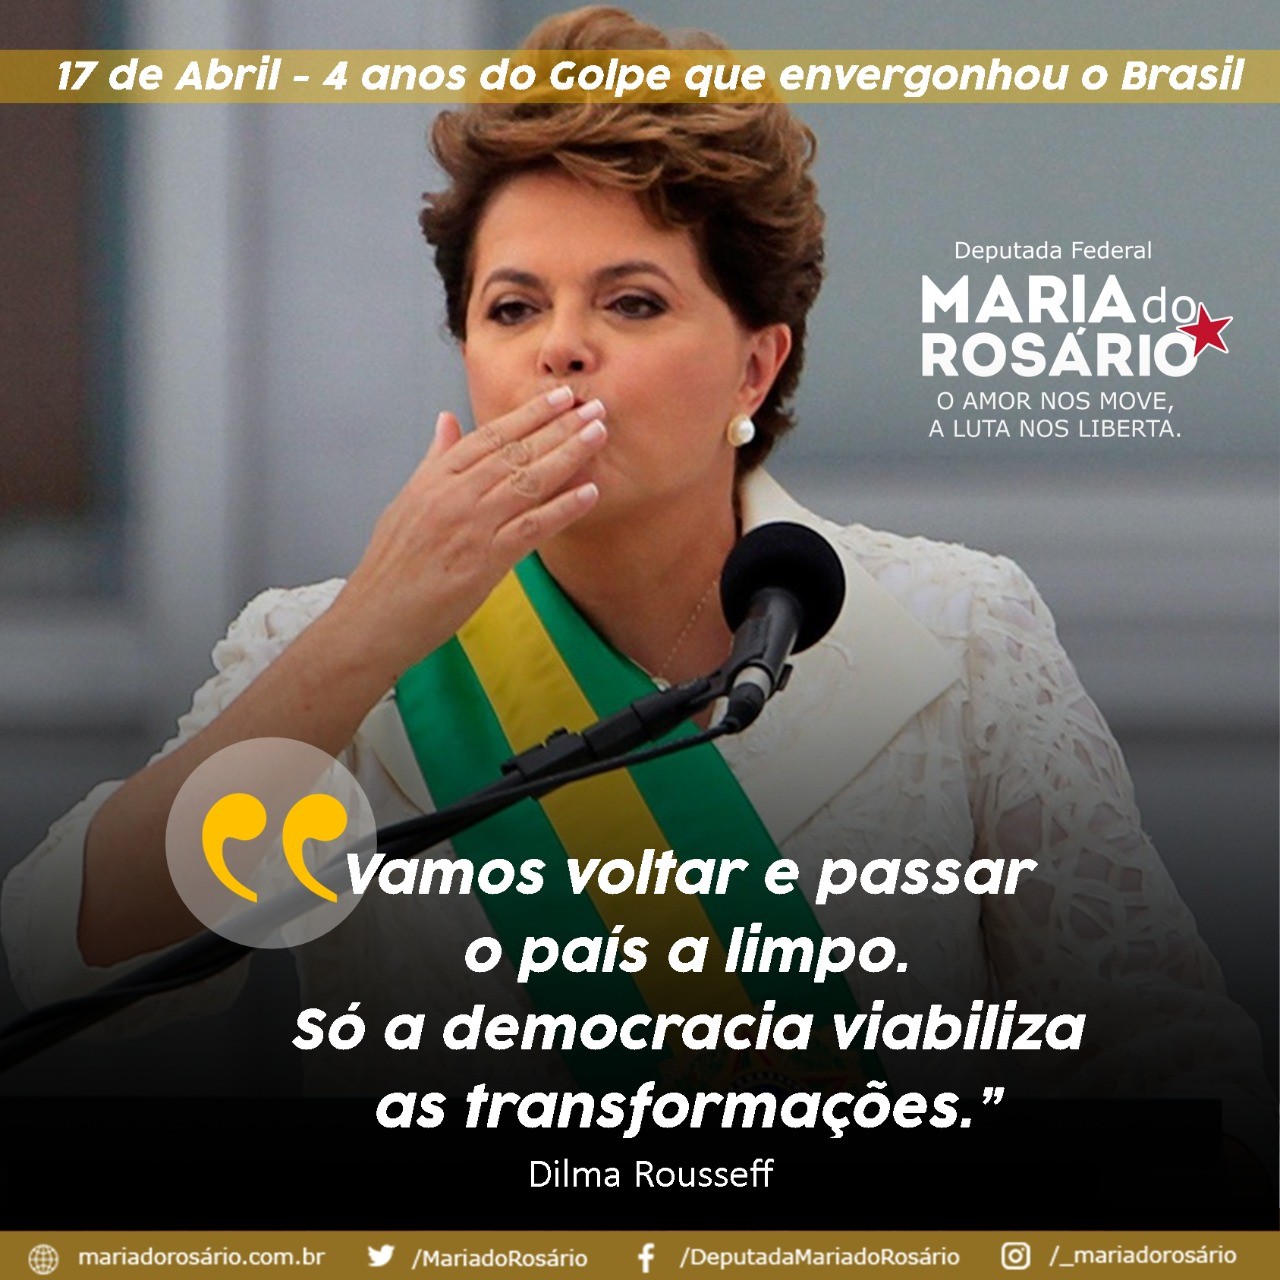 17 de abril: 4 anos do impeachment da primeira presidenta do Brasil